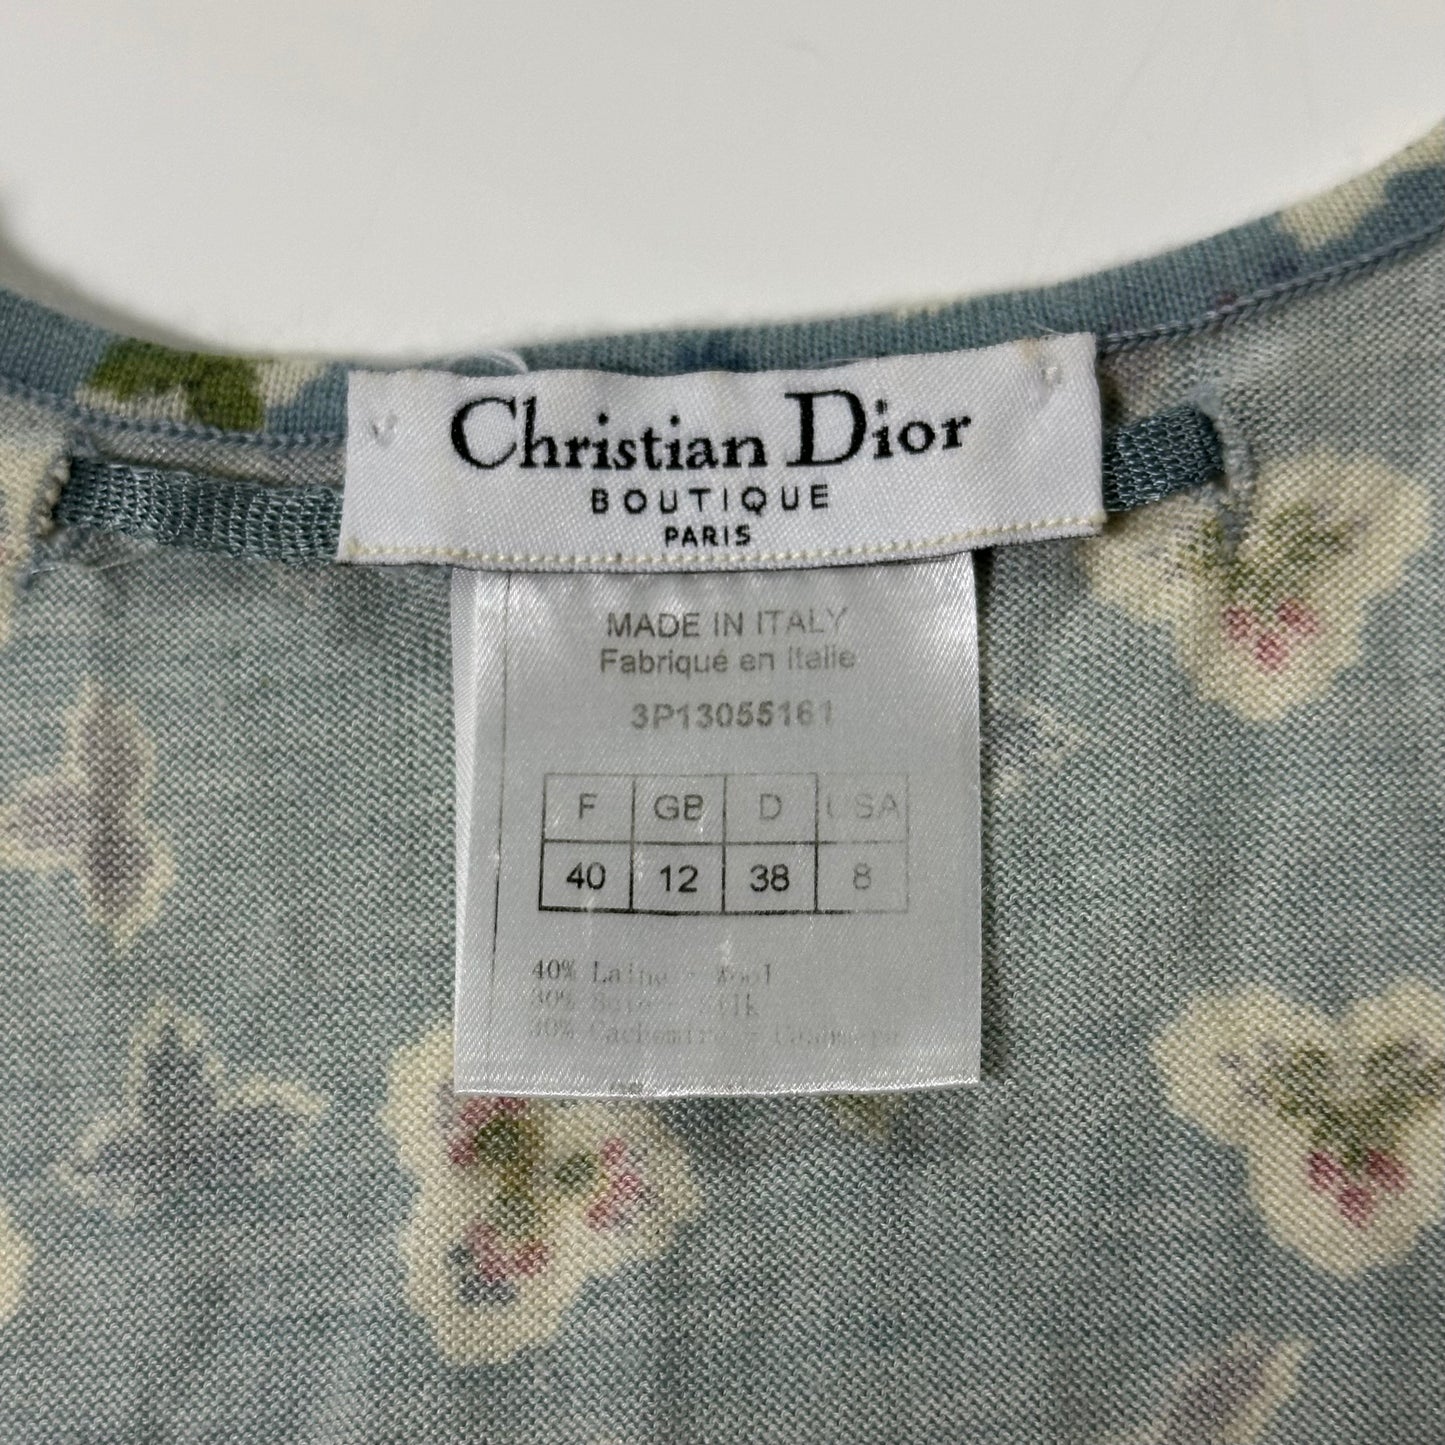 CHRISTIAN DIOR Spring Summer 2003 Floral Print Knit Tank Top